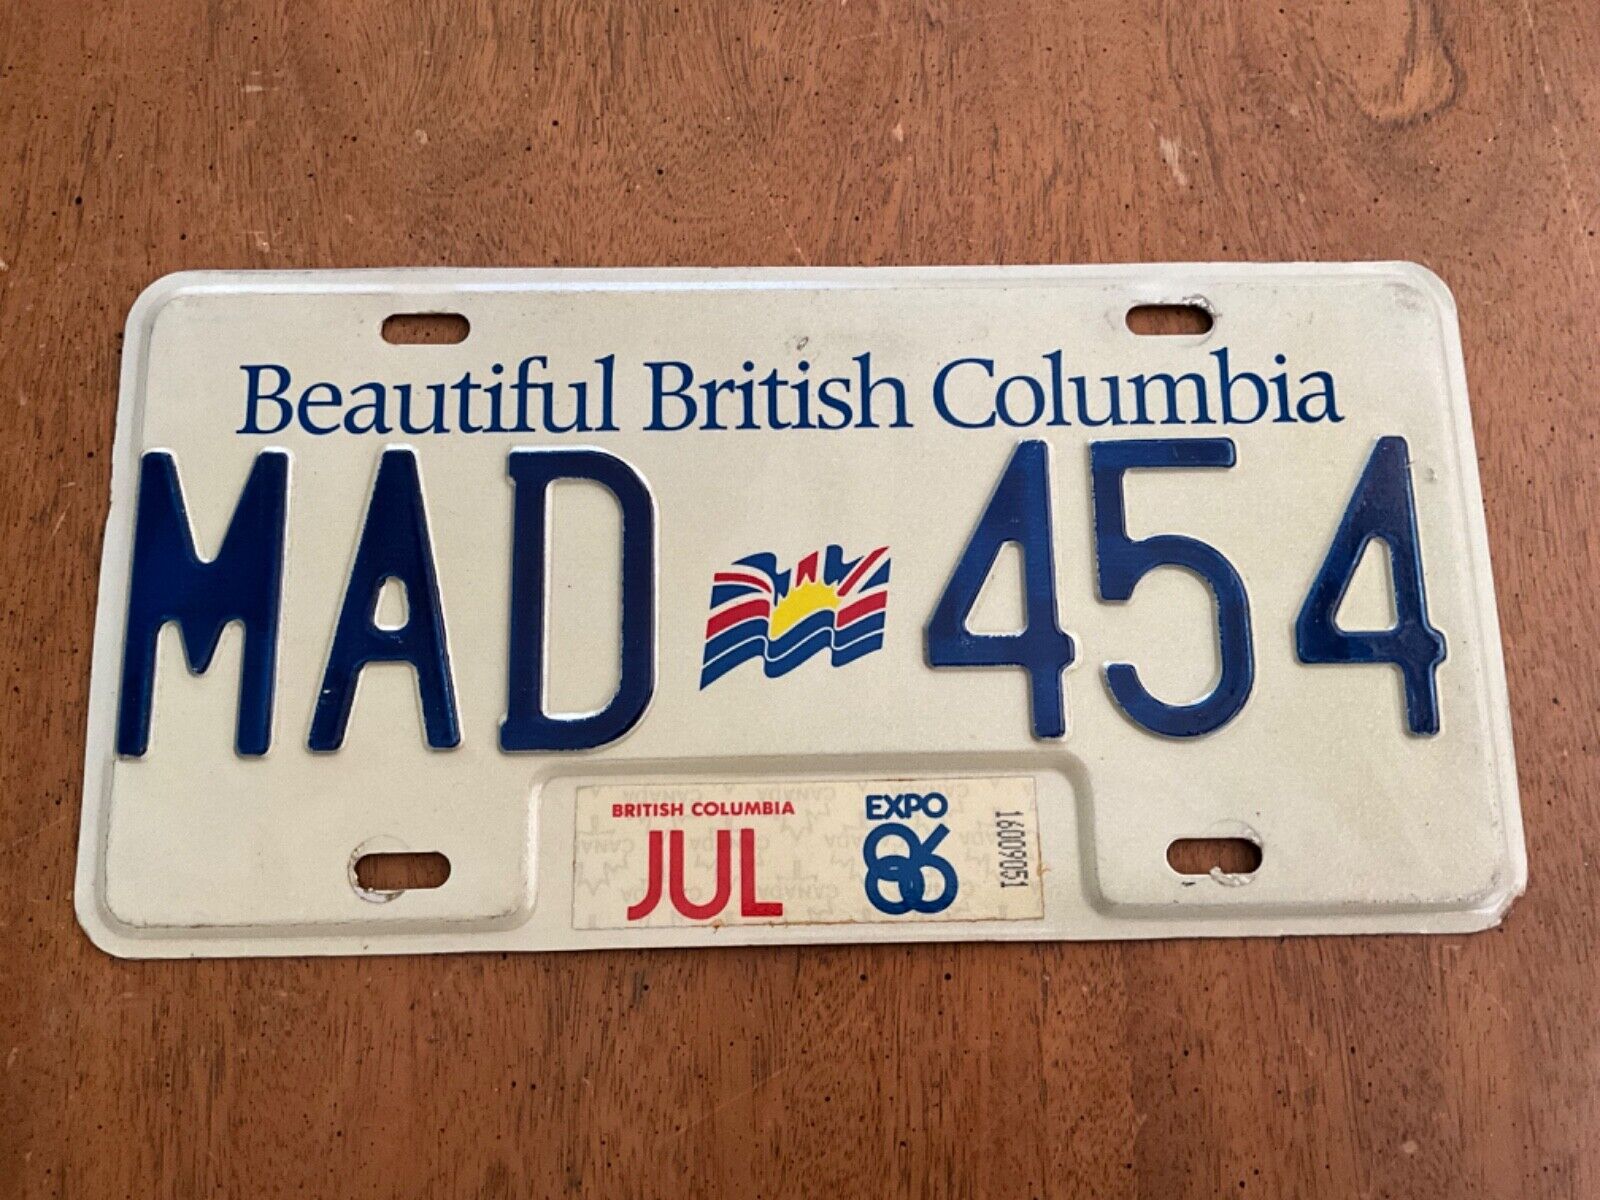 1986 British Columbia Canada License Plate Tag MAD 454 Expo